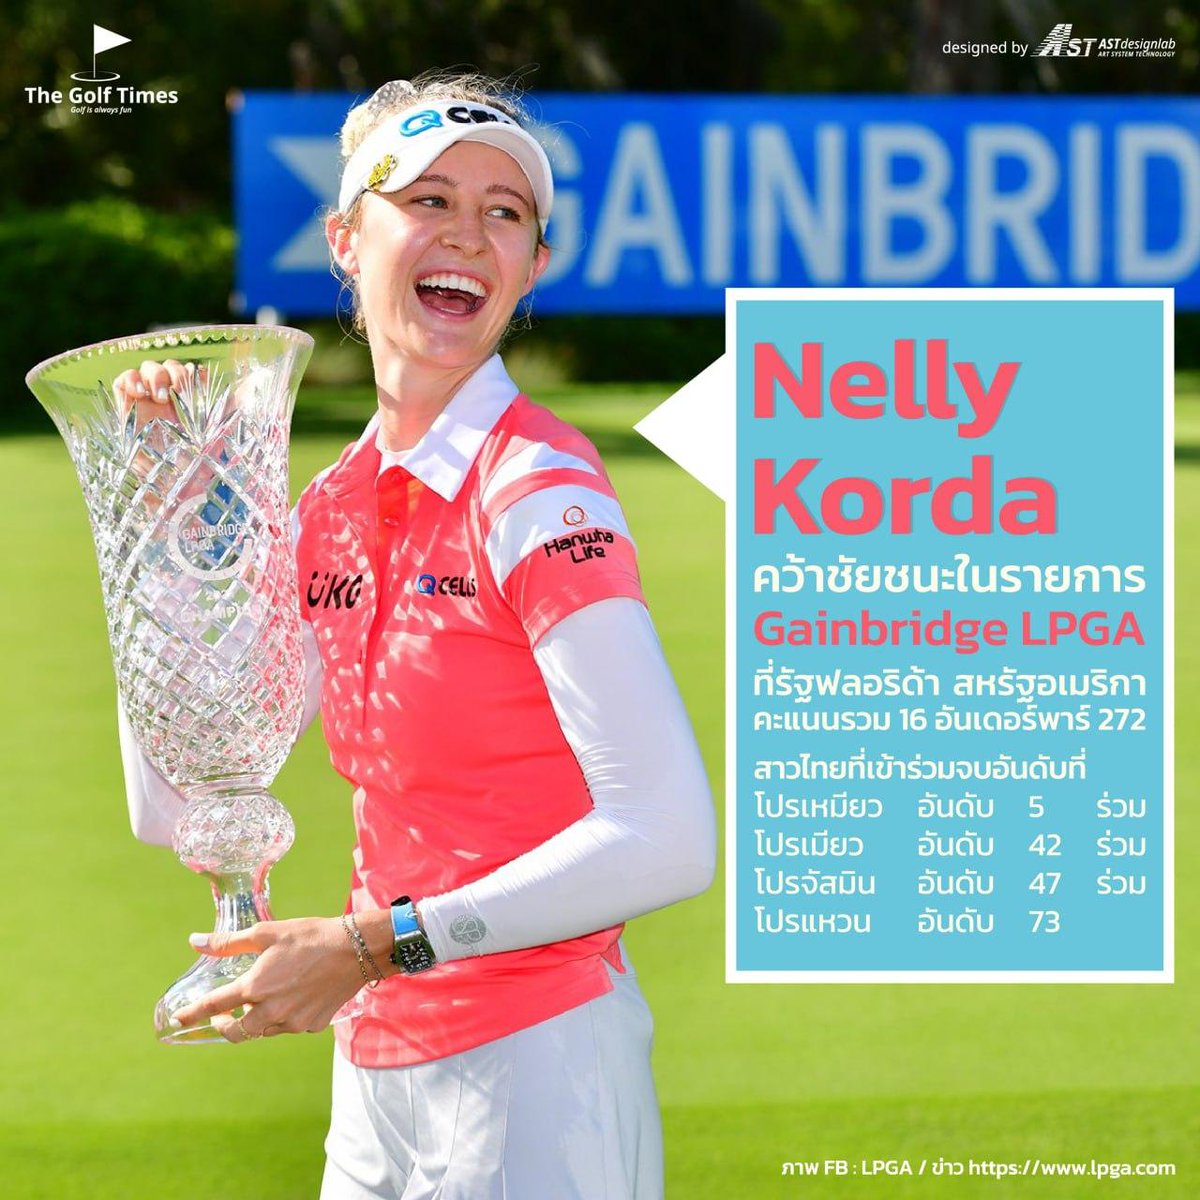 Nelly Korda คว้าชัยชนะในรายการ Gainbridge LPGA ที่รัฐฟลอริด้า ประเทศสหรัฐอเมริกา @NellyKorda 

#Gainbridge #lpgatour #LPGA #gainbridgelpga #NellyKorda #CheersToTheChampion #DiamondLPGA #golf #golfer #golfswing #golfthailand #골프 #골프스윙
#TheGolfTimes